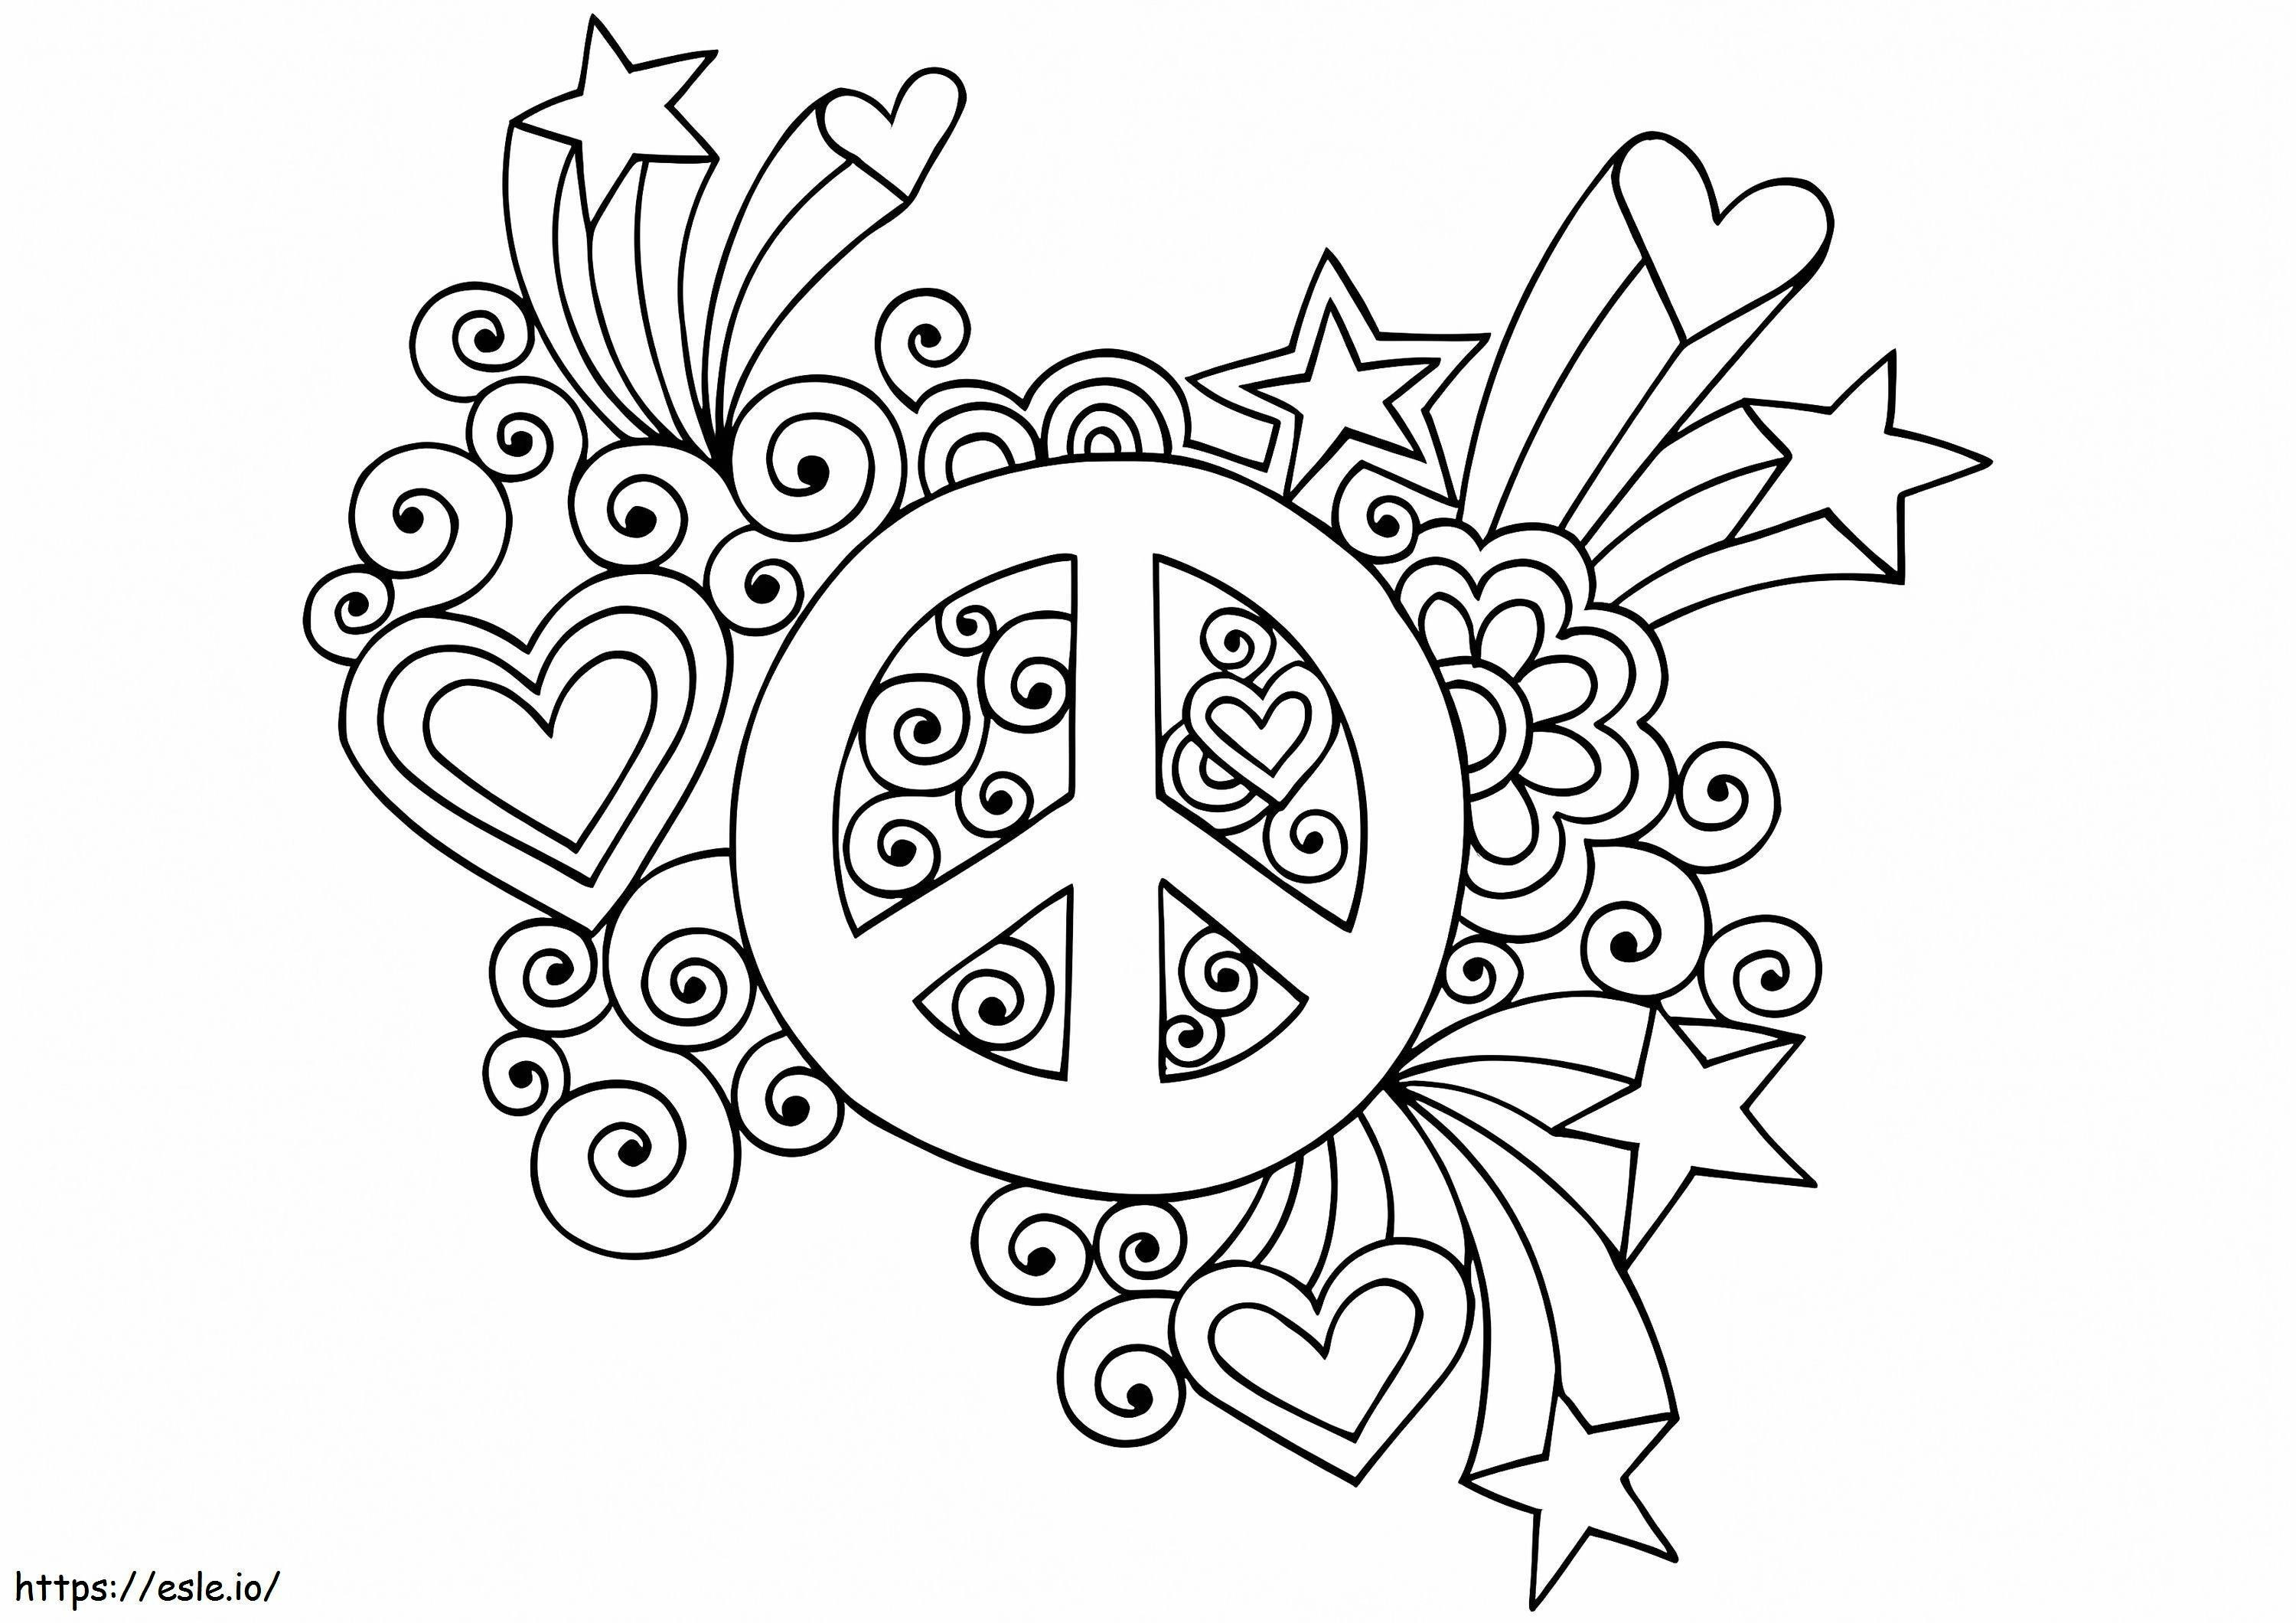 Doodle-Frieden ausmalbilder